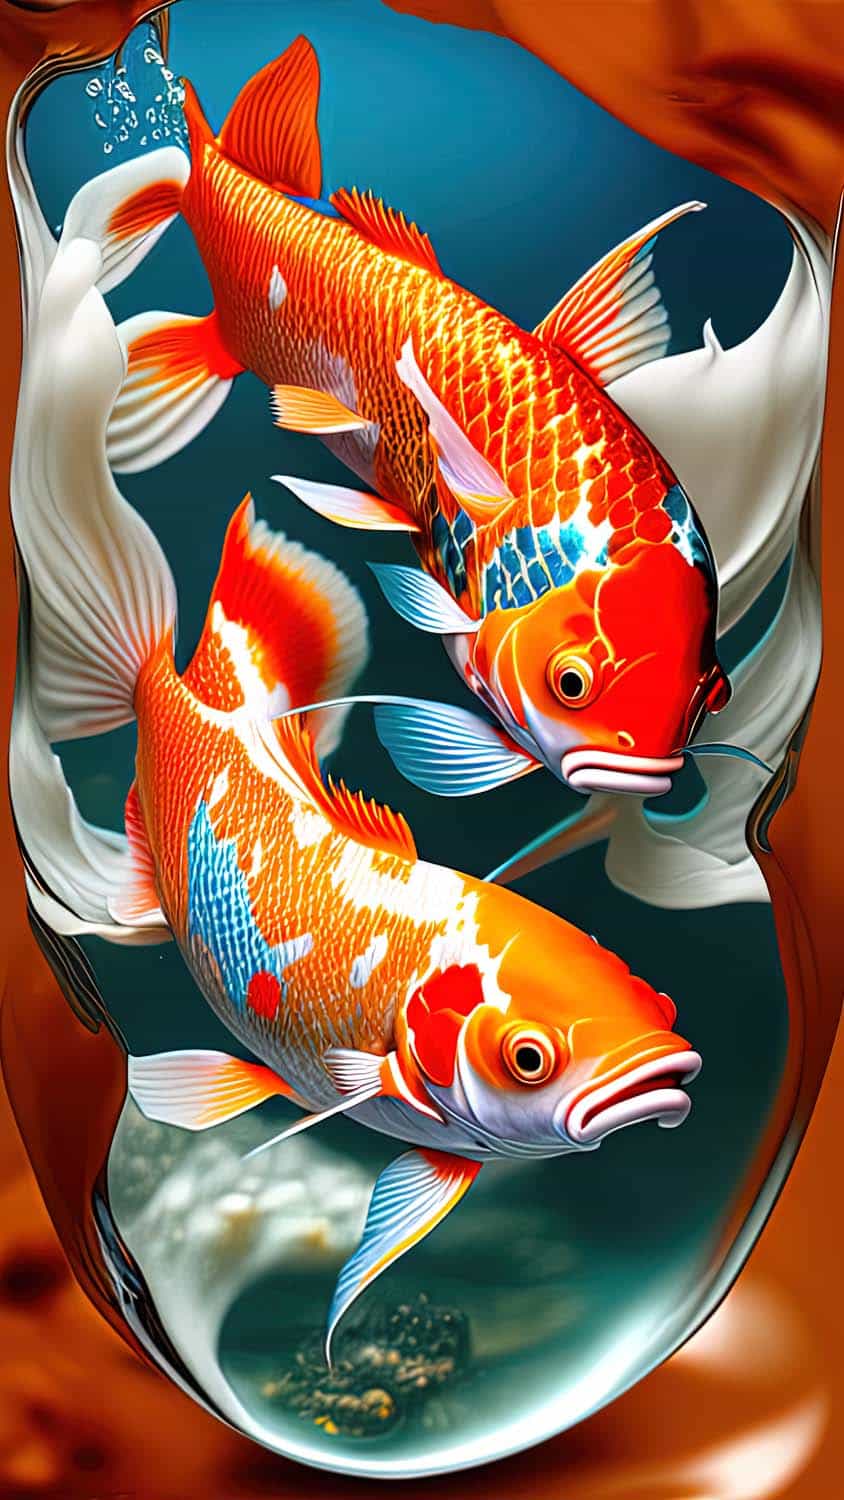 Koi Fish IPhone Wallpaper HD - IPhone Wallpapers : iPhone Wallpapers